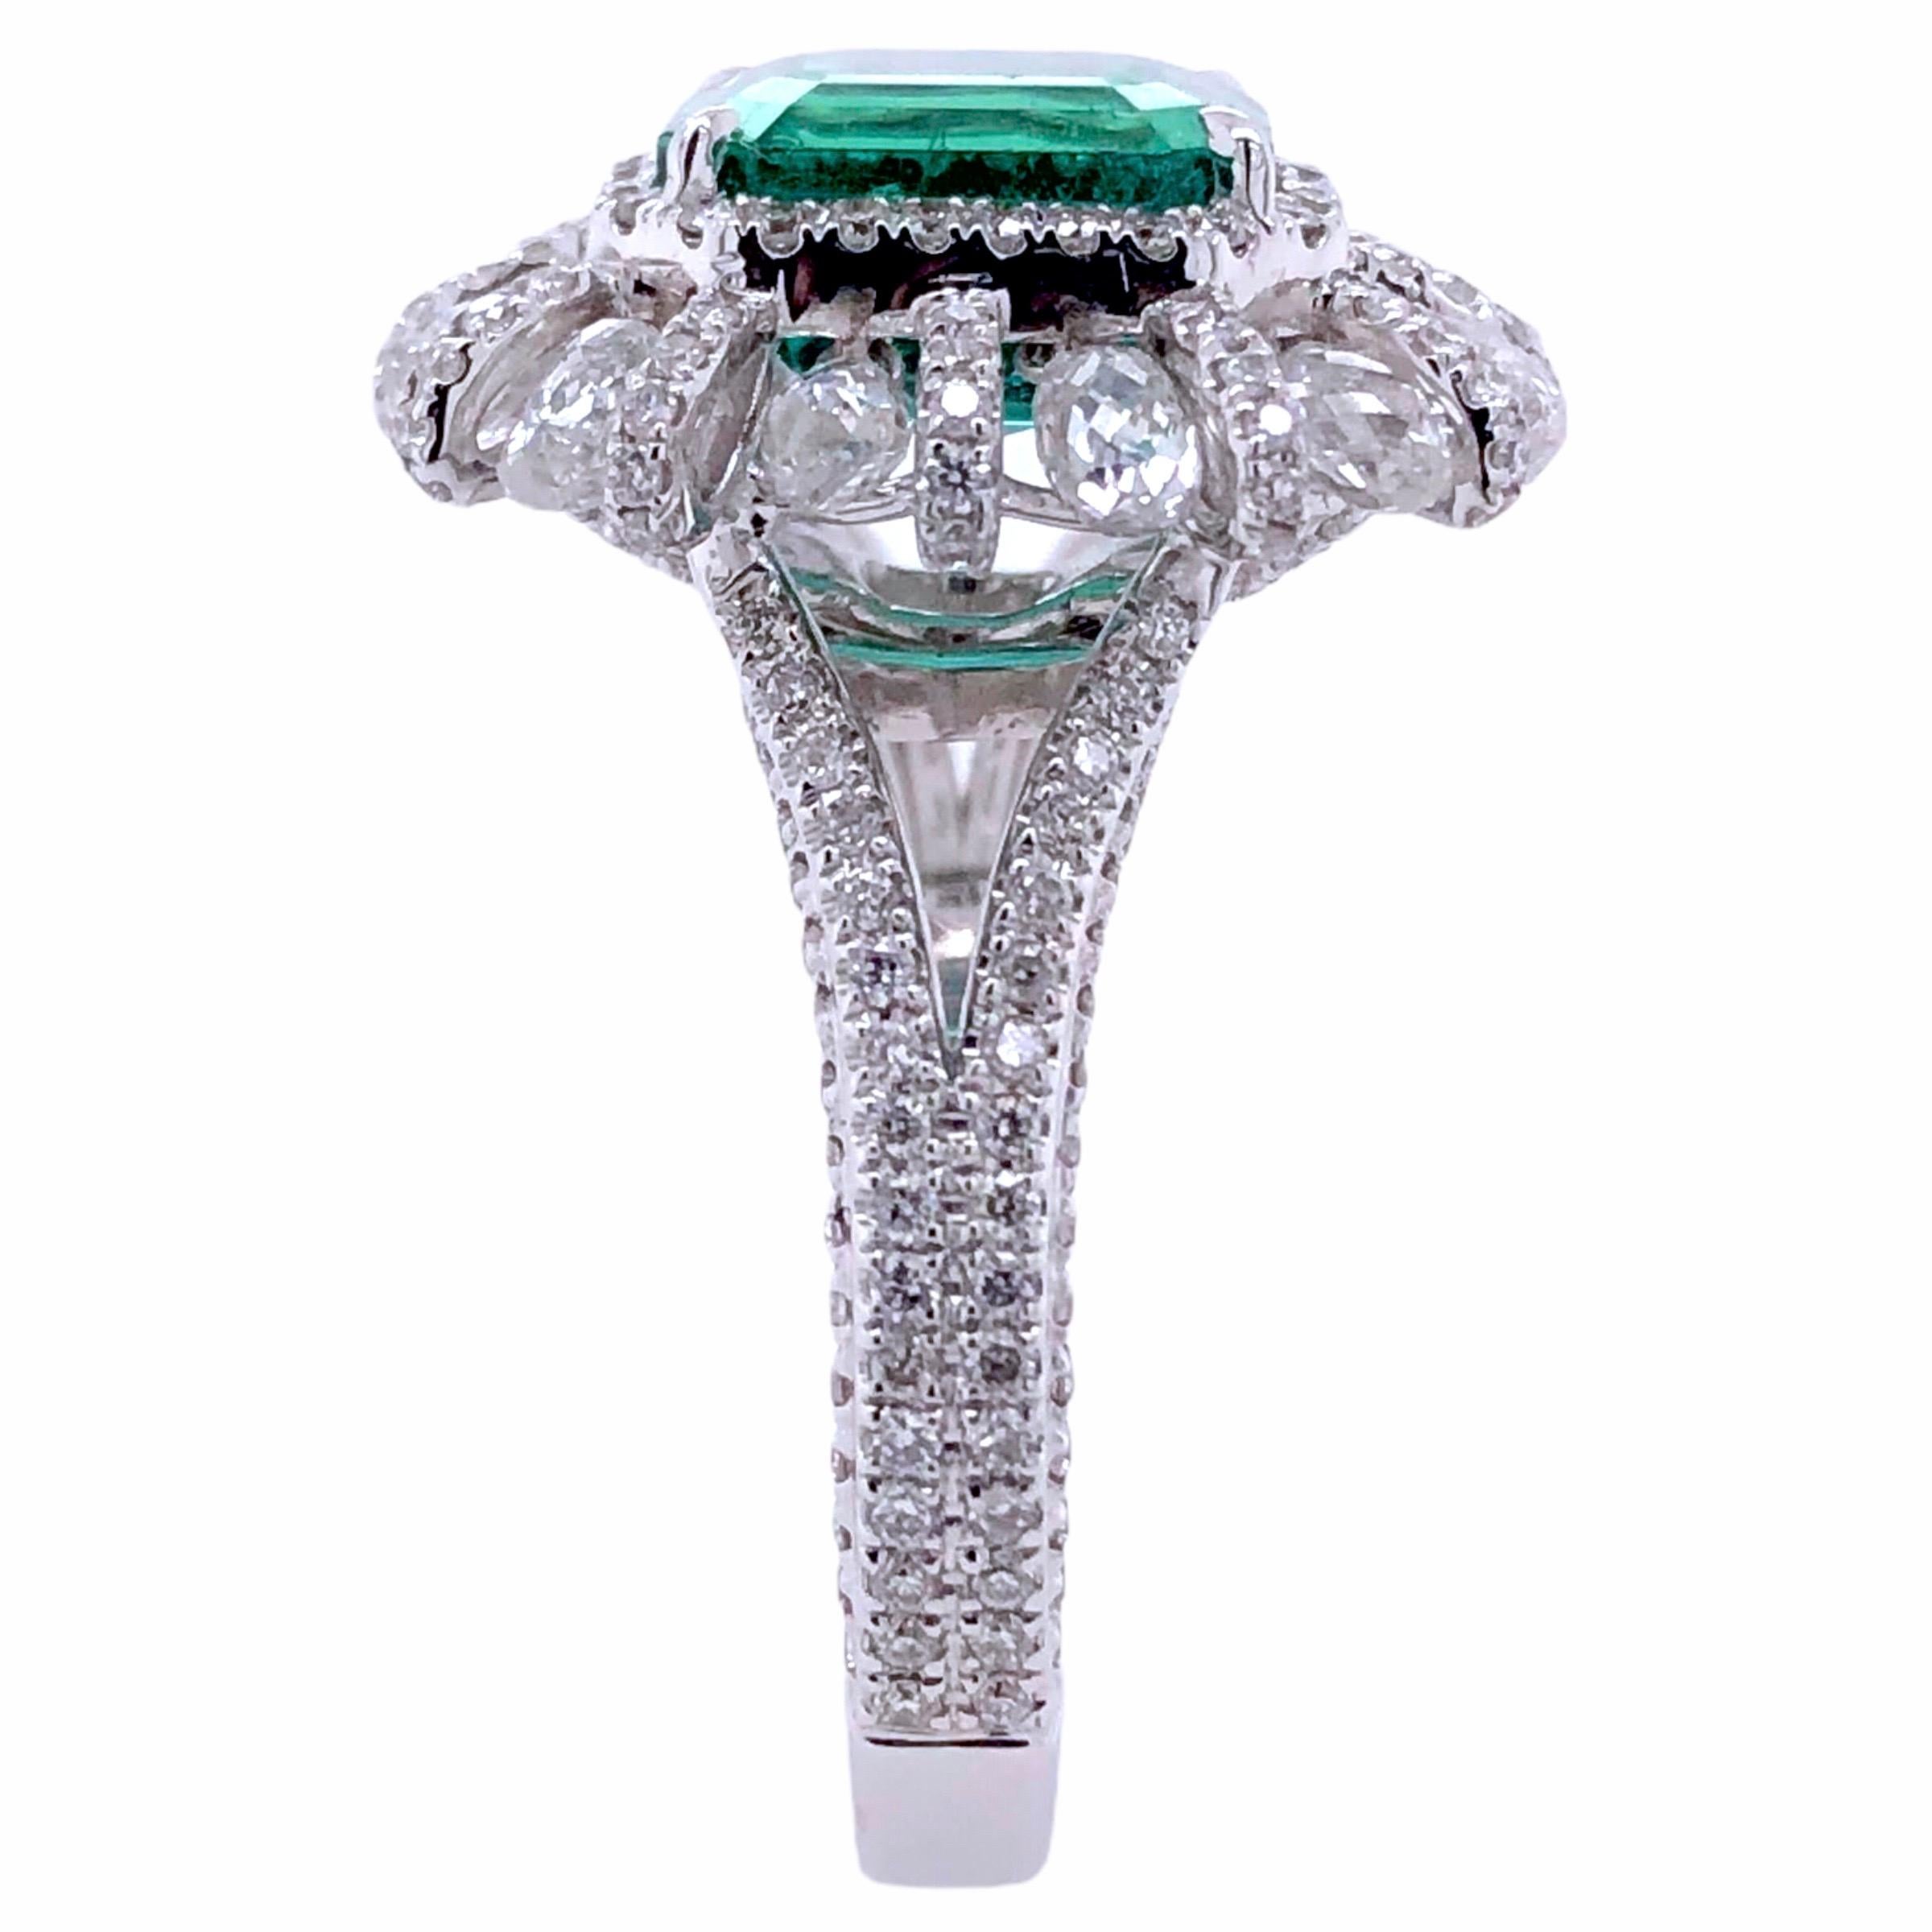 Art Deco Paris Craft House 2.98 Carat Emerald Diamond Ring in 18 Karat White Gold For Sale